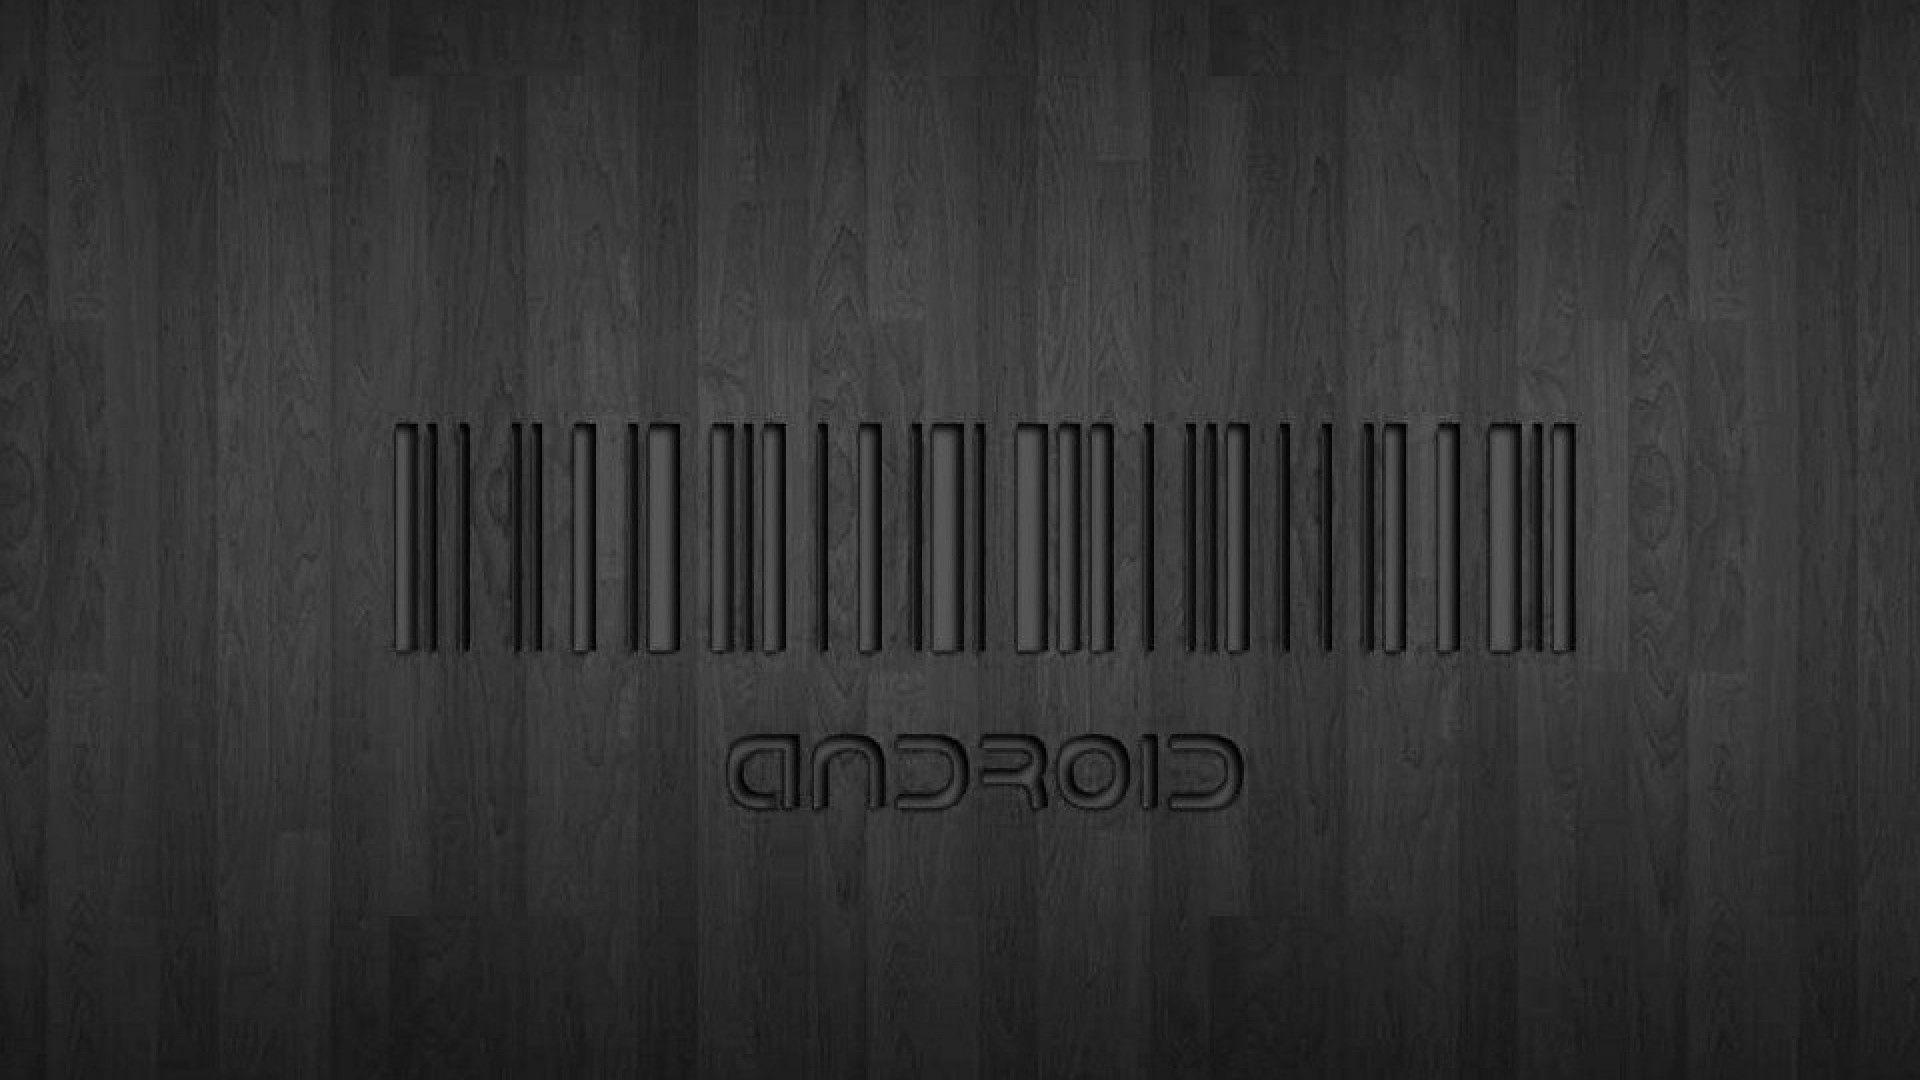 Android, Barcode, Wallpaper, Black, Wallpaper